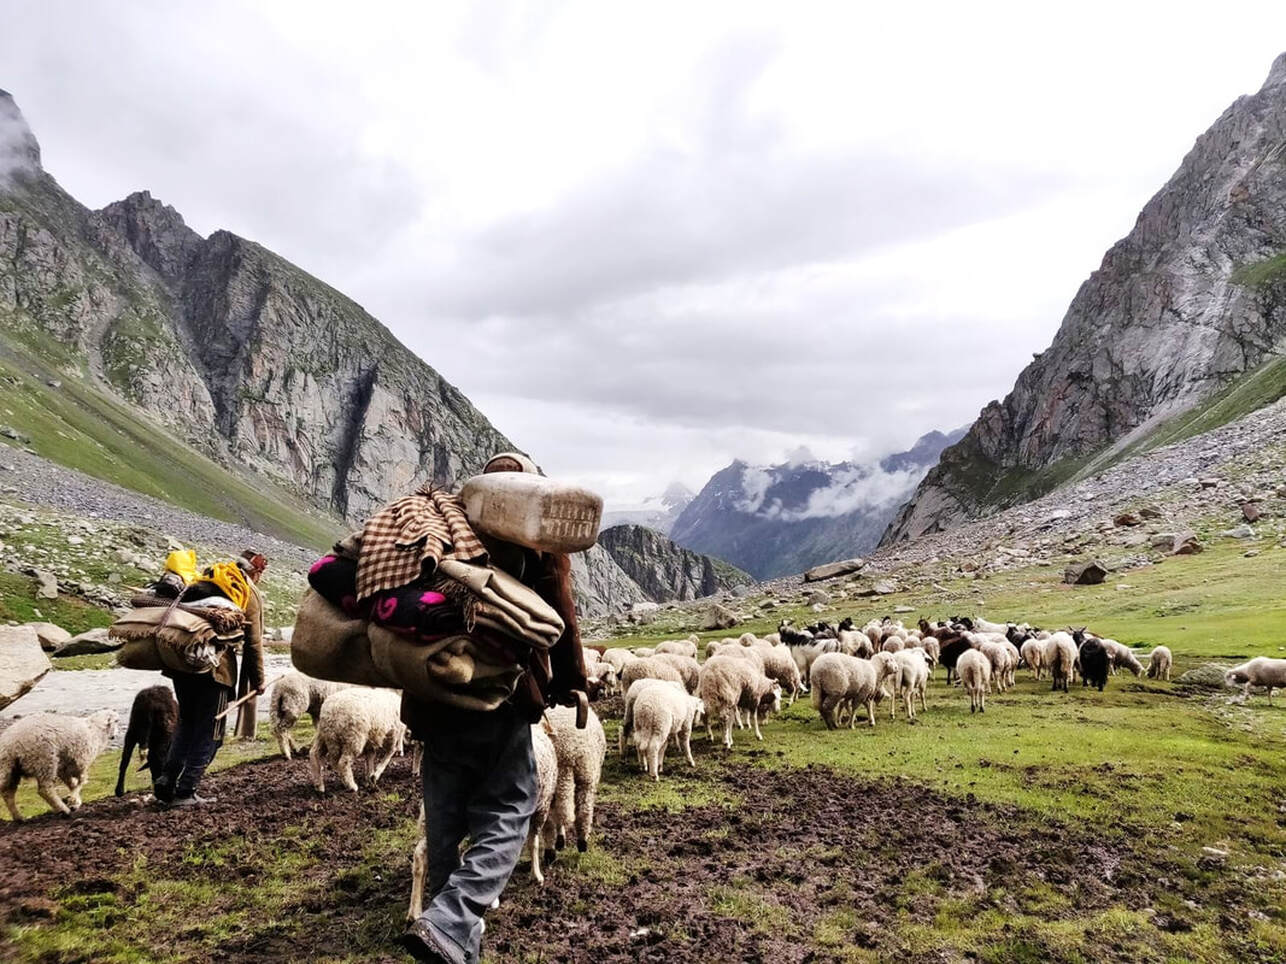 Gaddi shepherds descending from the Hamta pass into the barren valley of Lahaul